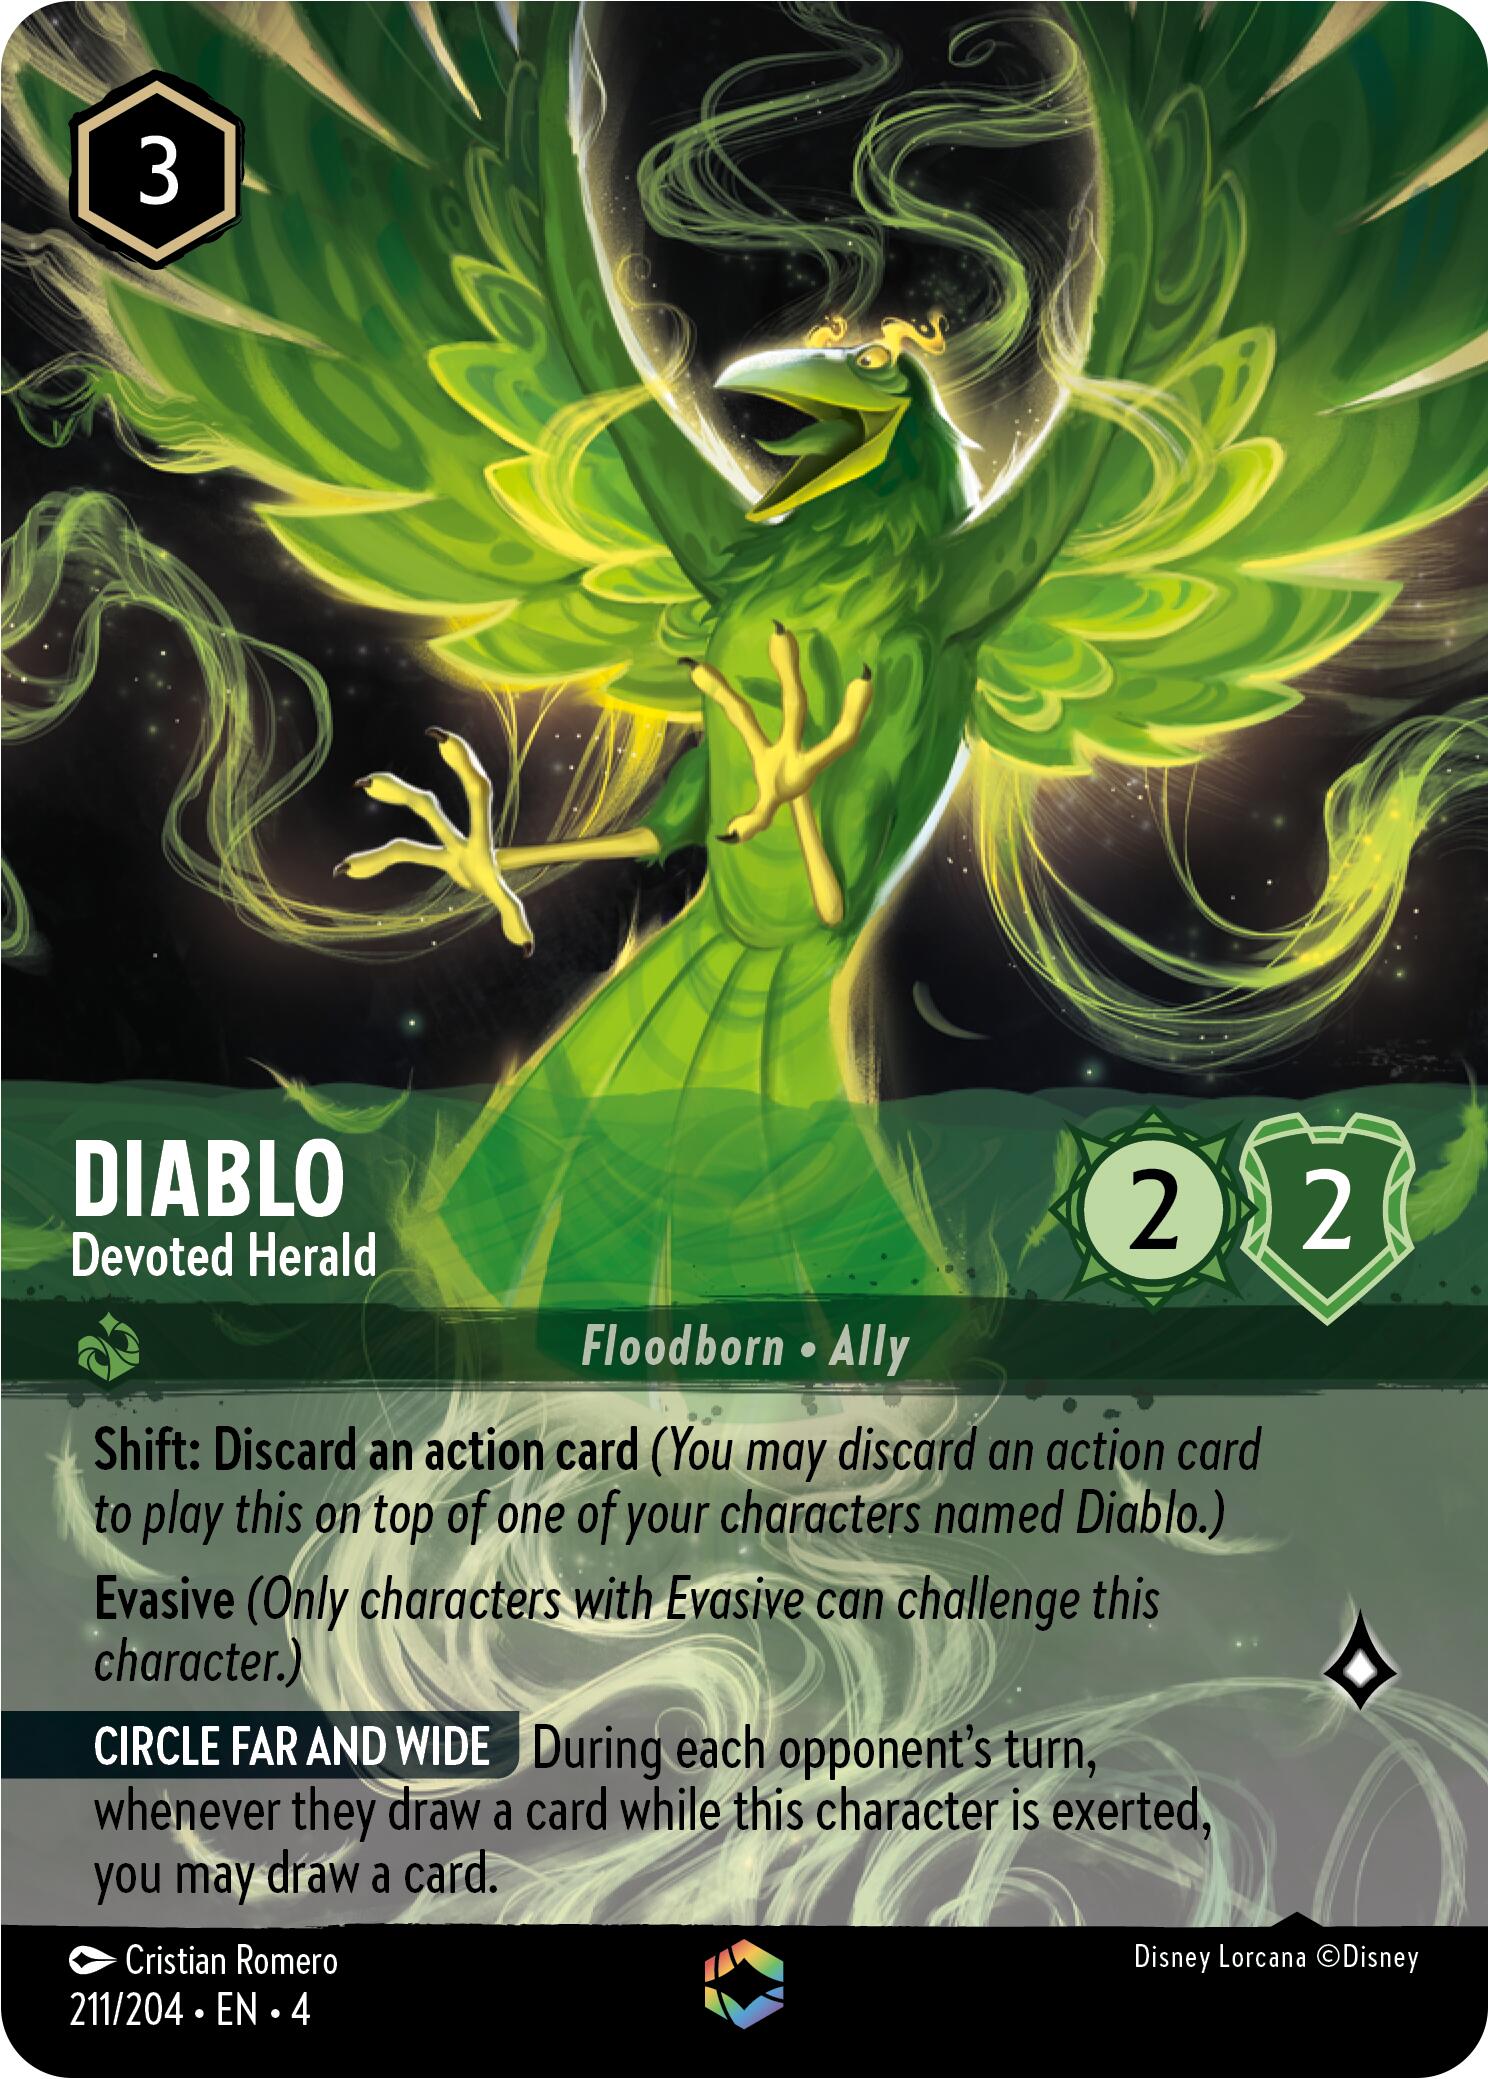 Diablo - Devoted Herald (Enchanted) - Ursula's Return - Disney 